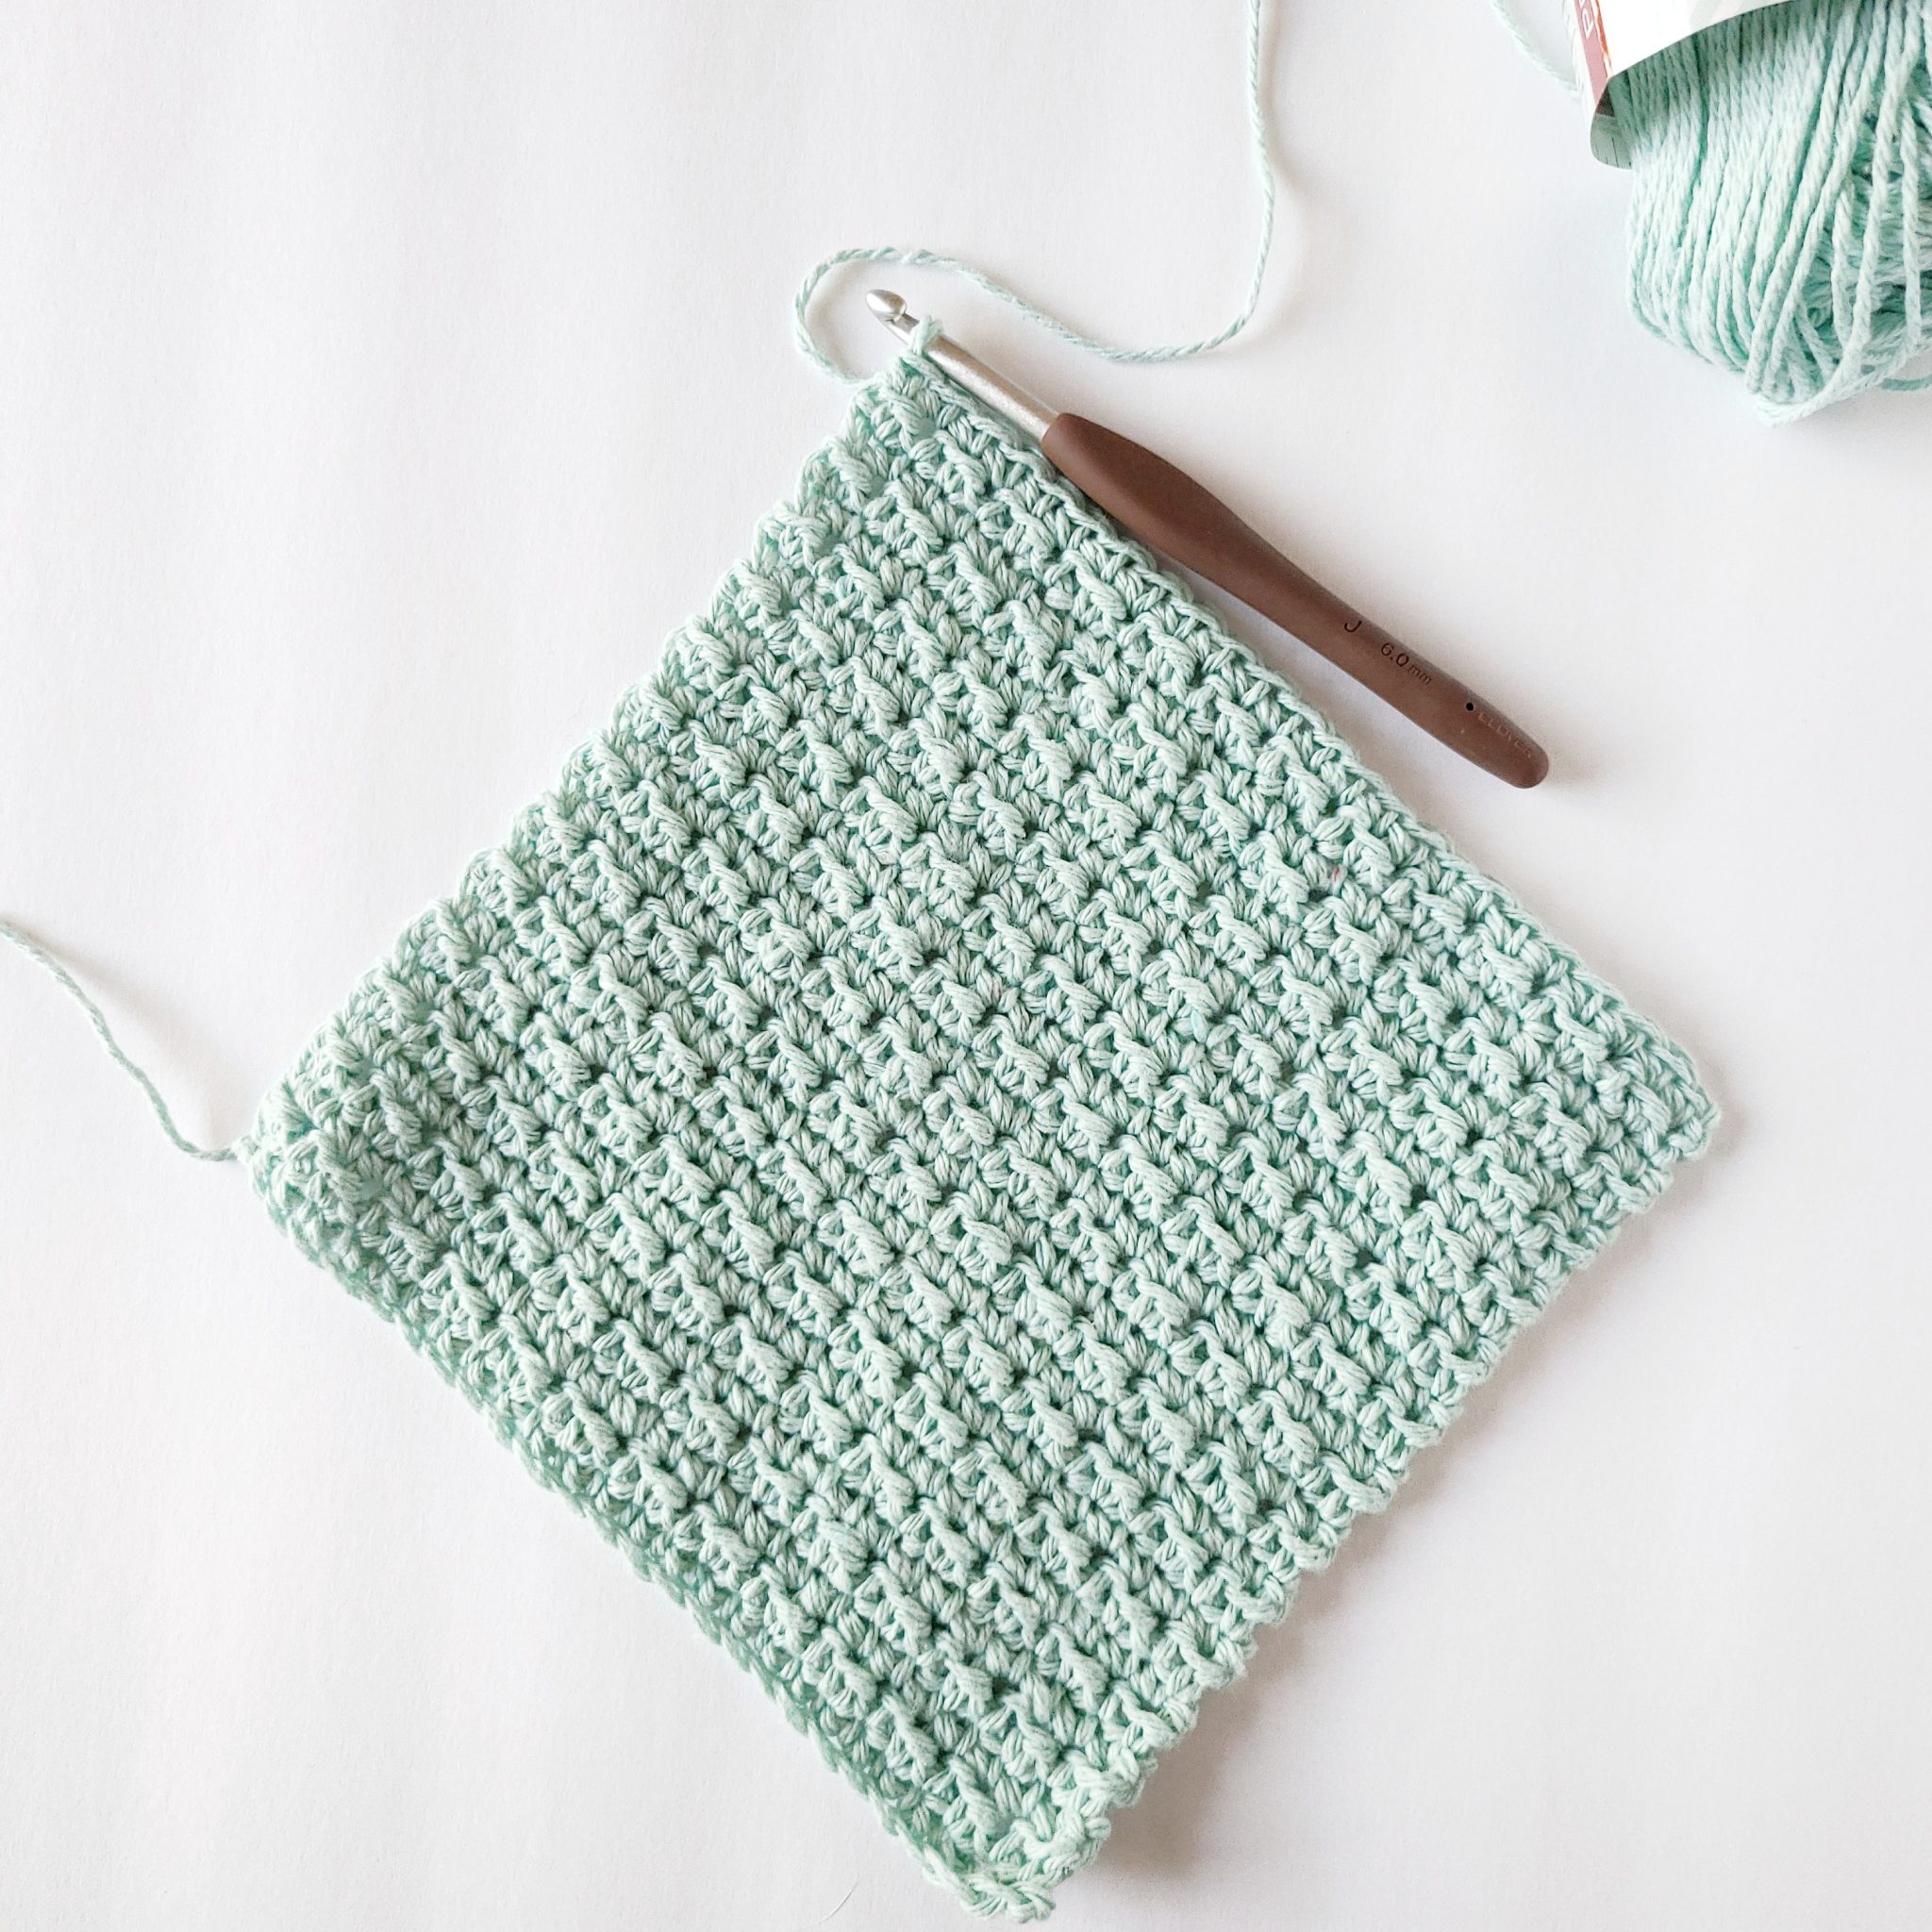 Crochet washcloth by EasyCrochet